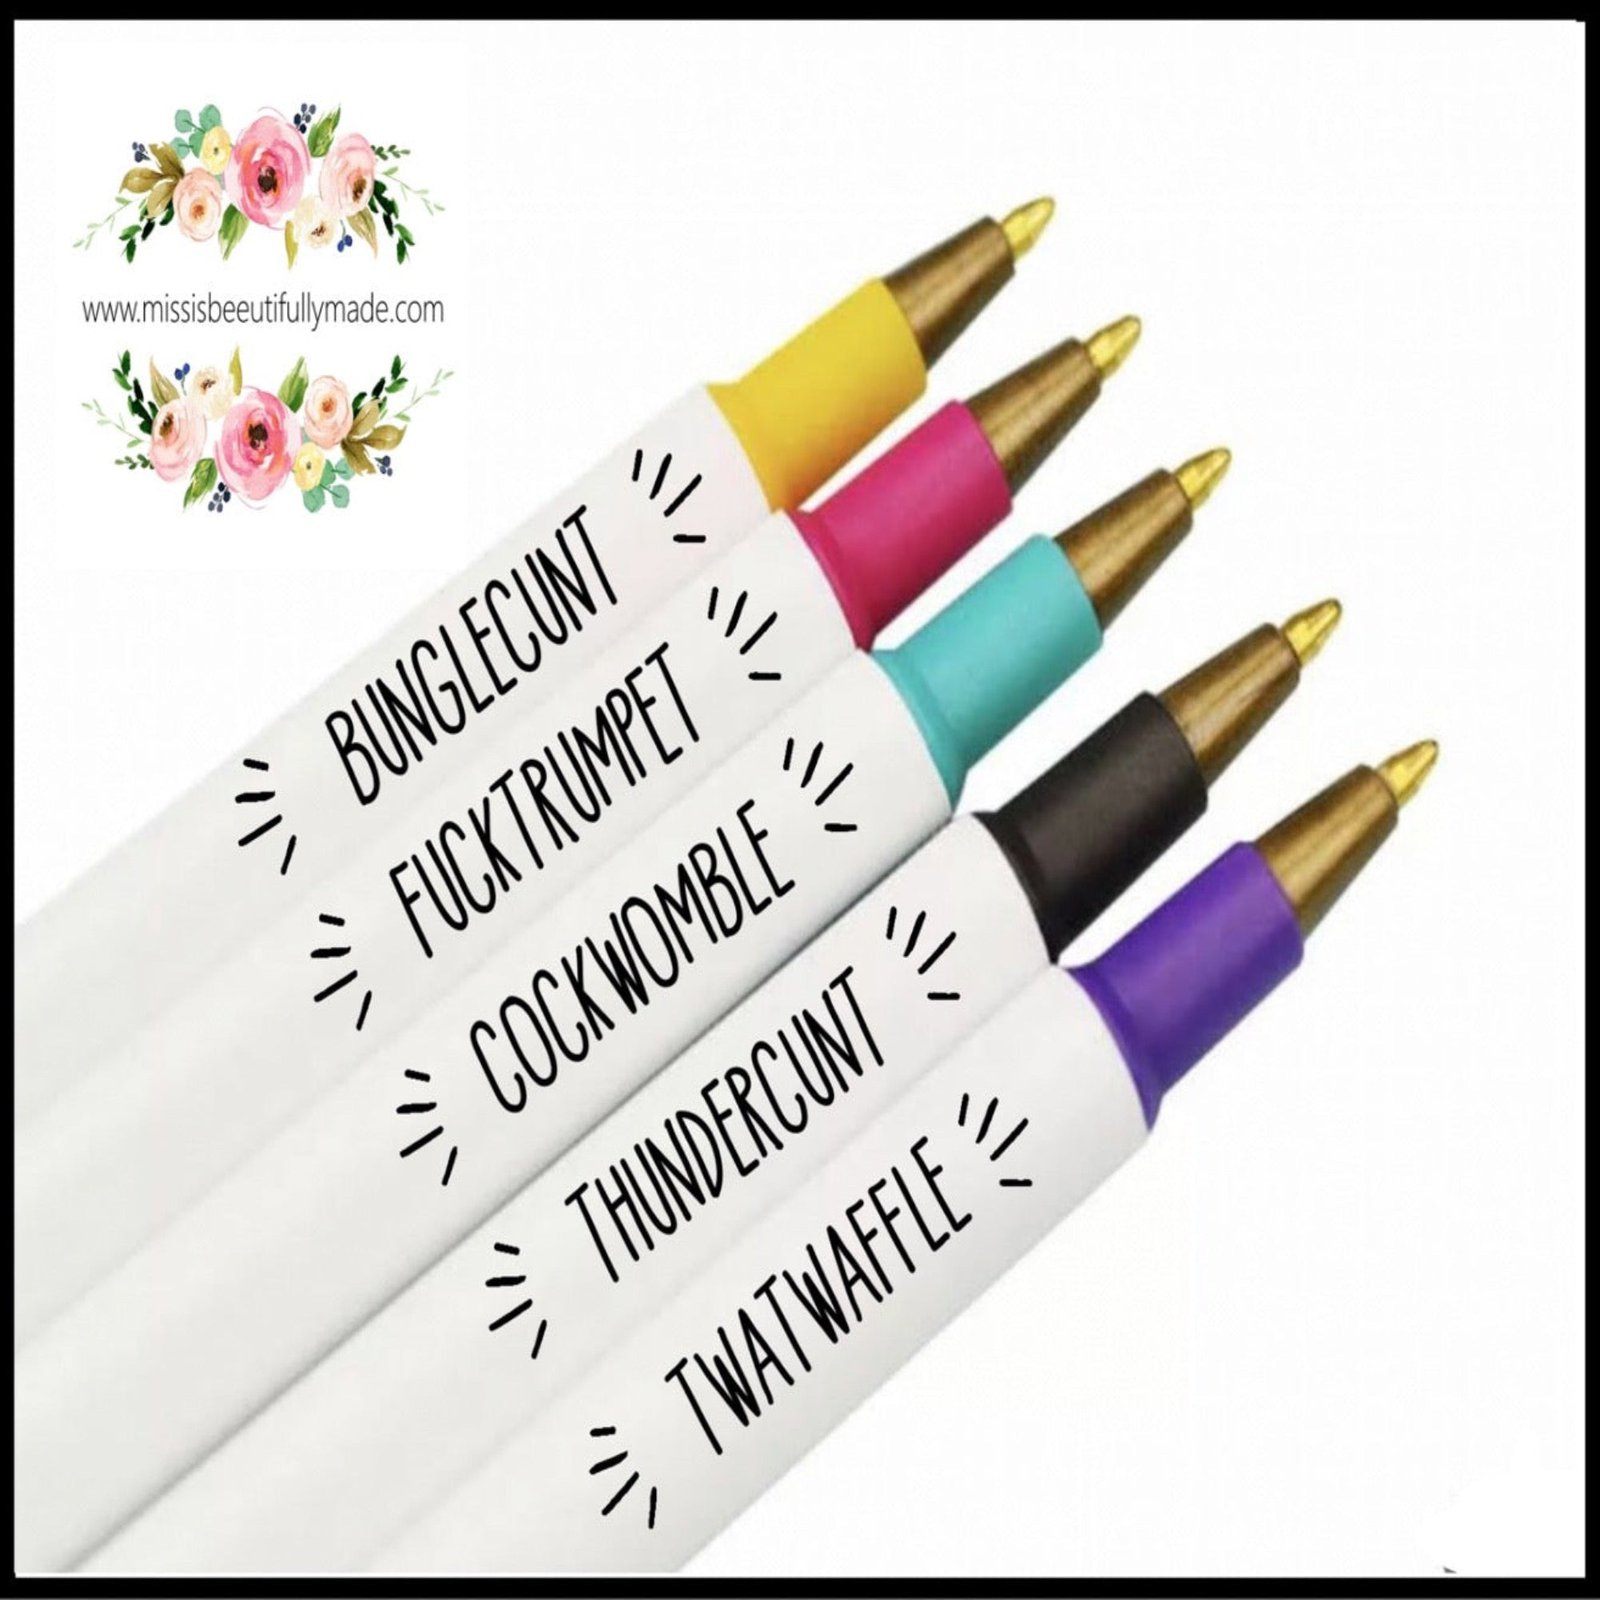 5 Pack of coloured tip pens - Designs include -   BUNGLECUNT  FUCKTRUMPET  COCKWOMBLE  THUNDERCUNT  TWATWAFFLE. Pen tip colours are yellow, pink, blue, black, purple